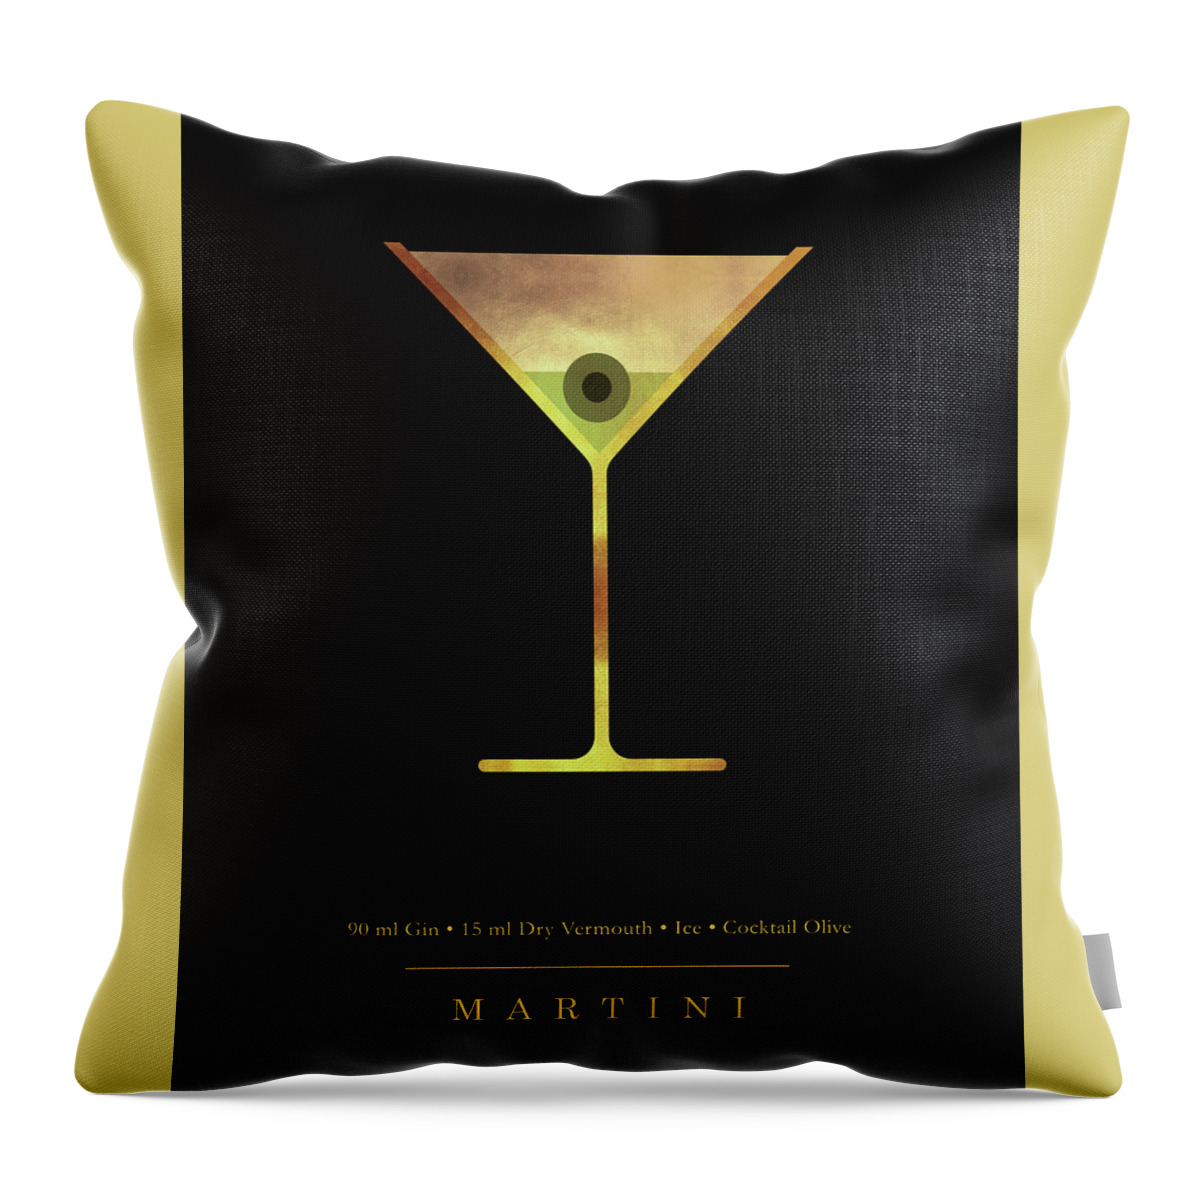 Martini Throw Pillow featuring the digital art Martini Cocktail - Classic Cocktail Print - Black and Gold - Modern, Minimal Lounge Art by Studio Grafiikka